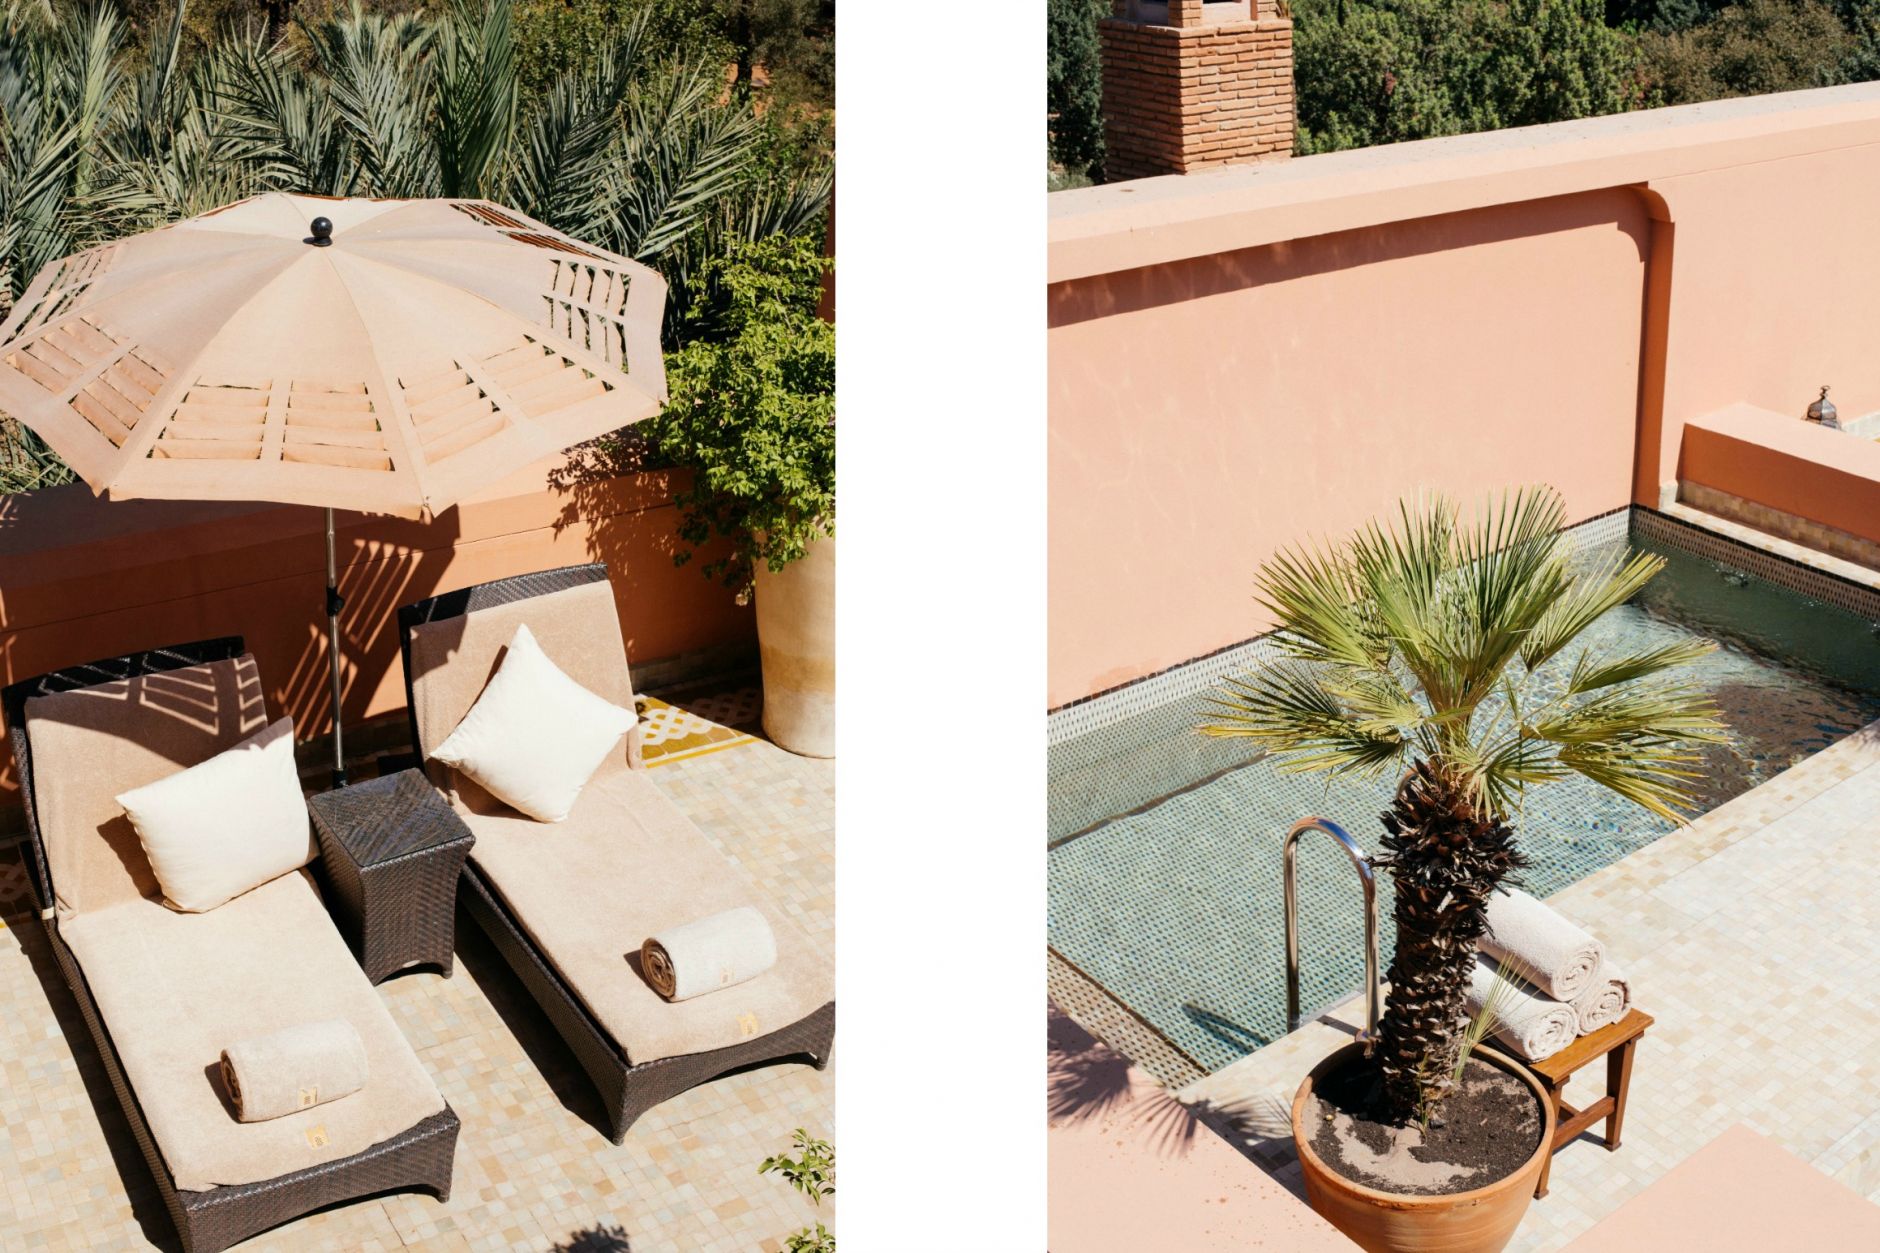 royal-mansour-hotel-luxury-marrakesch-marrakesh-morocco-edisa-shahini-disicouture-blog-duo-11